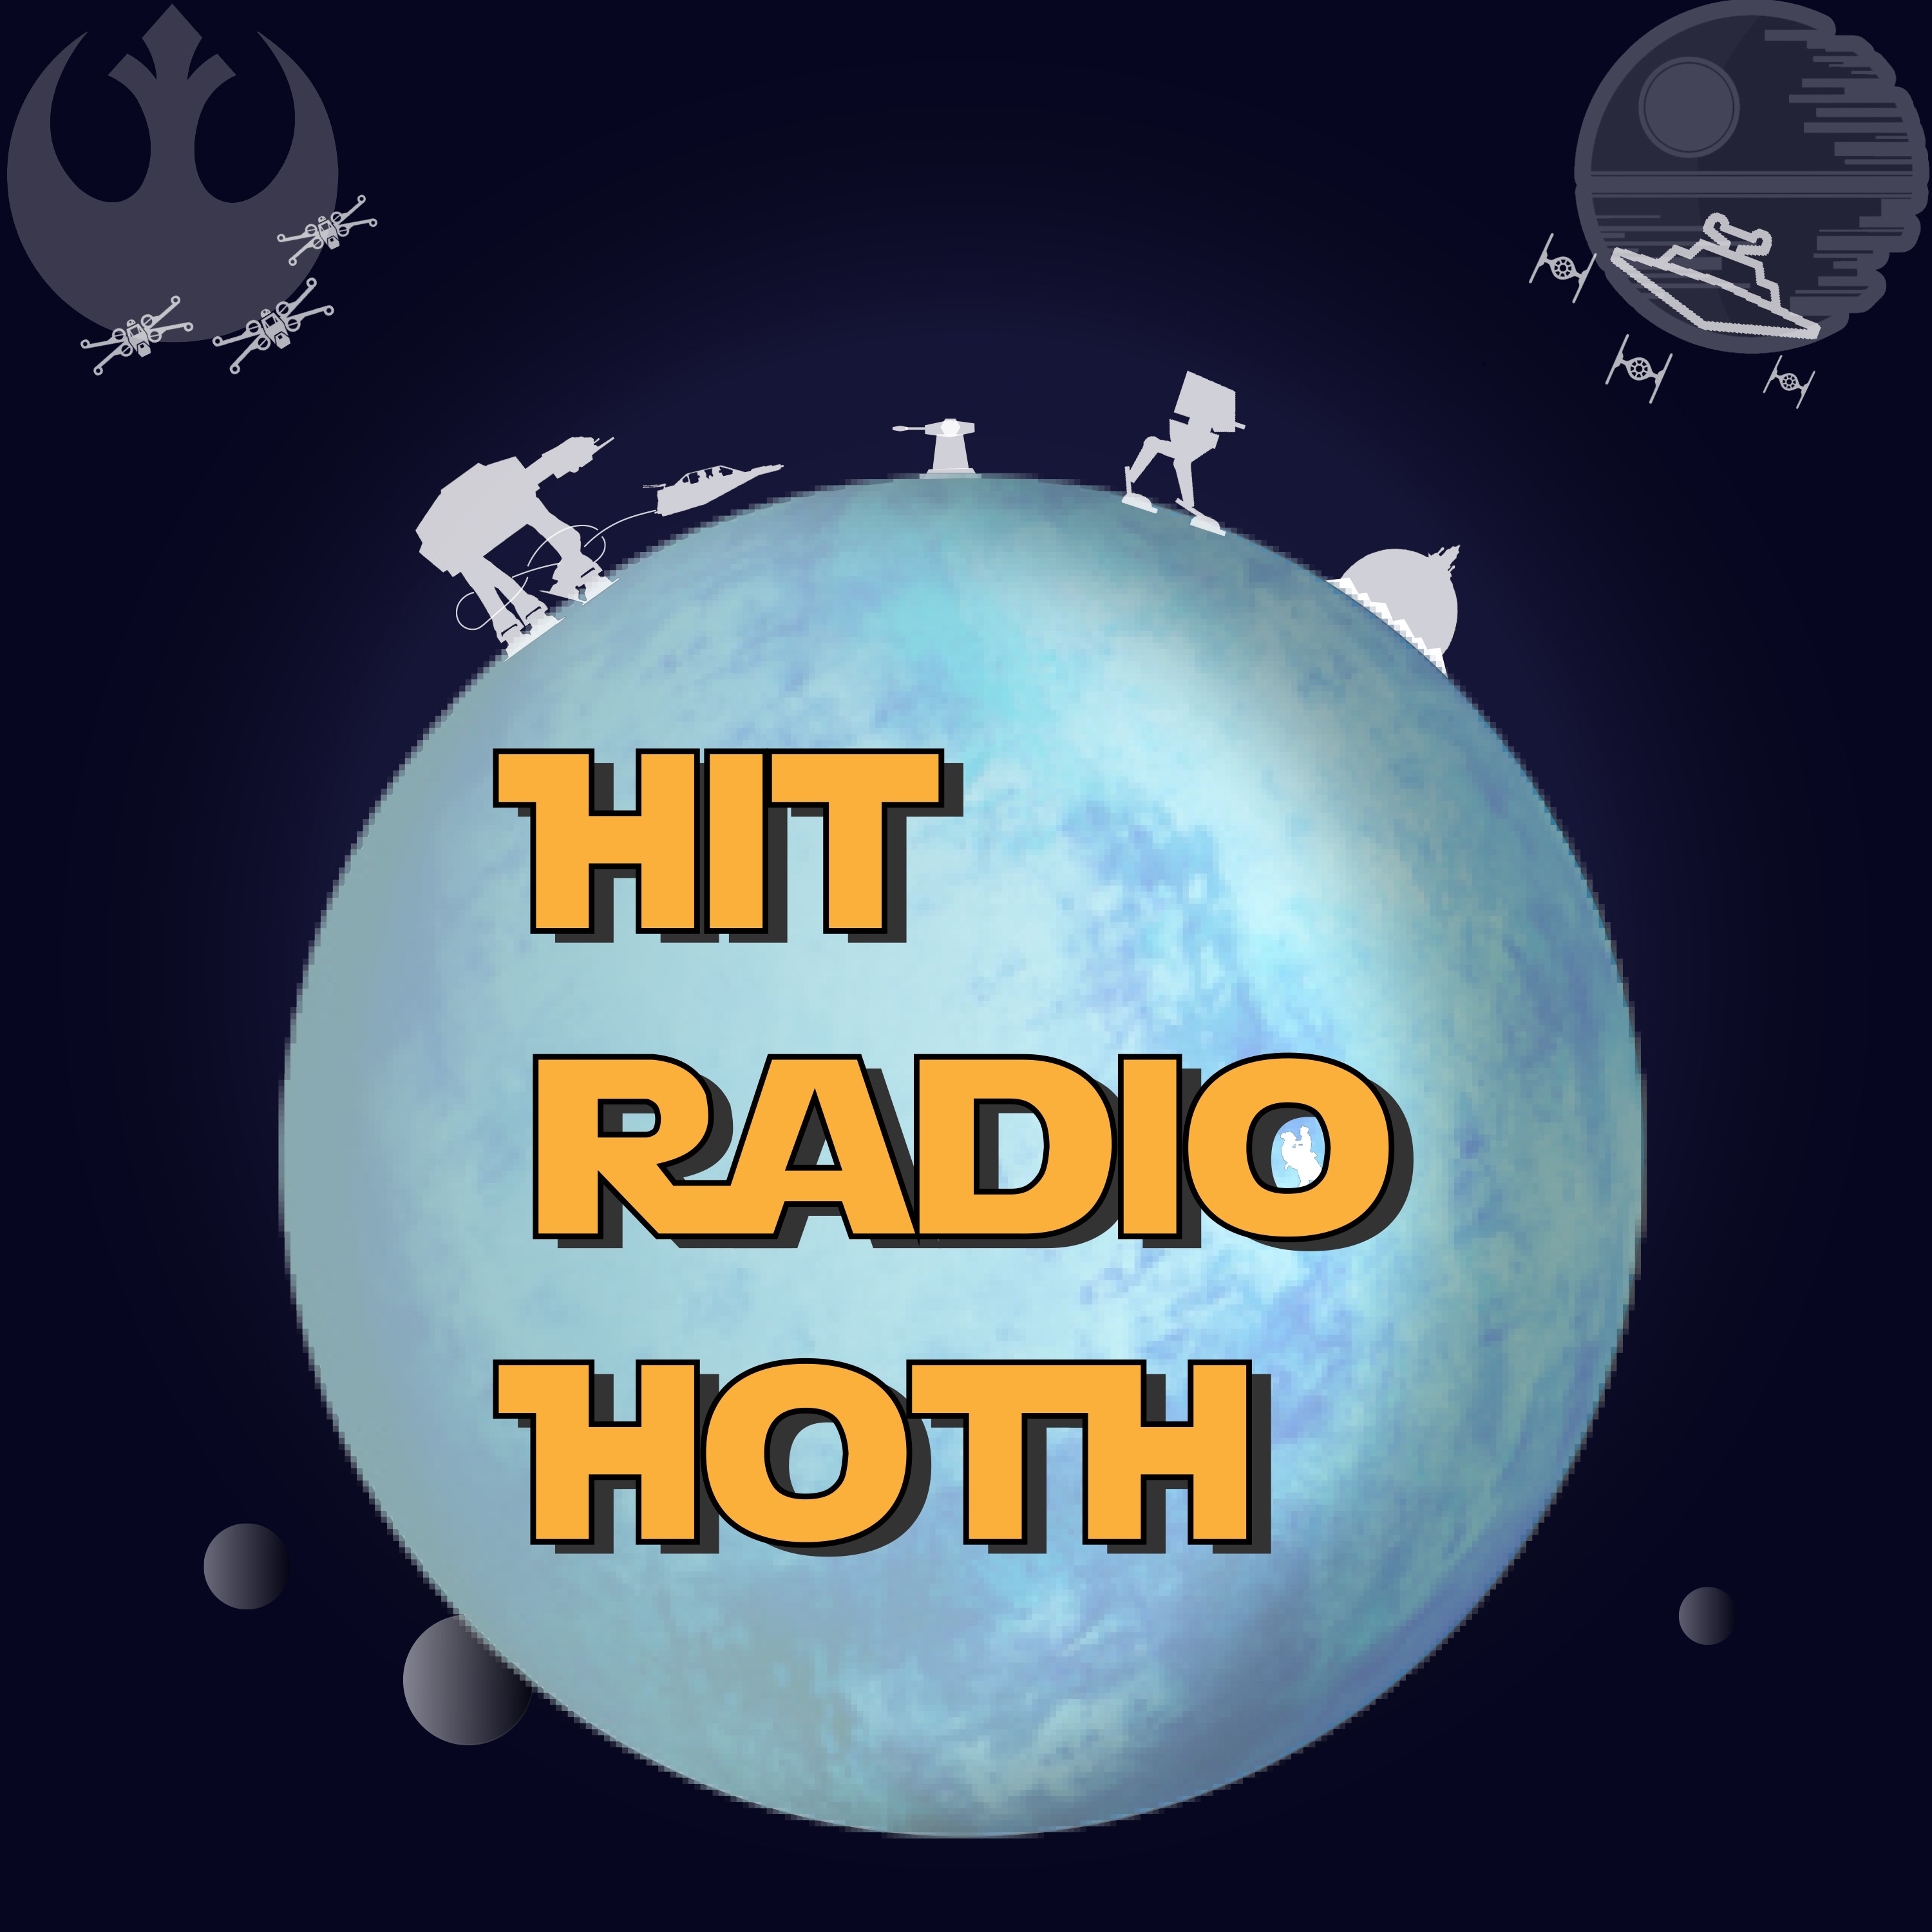 Hit Radio Hoth - Star Wars Podcast